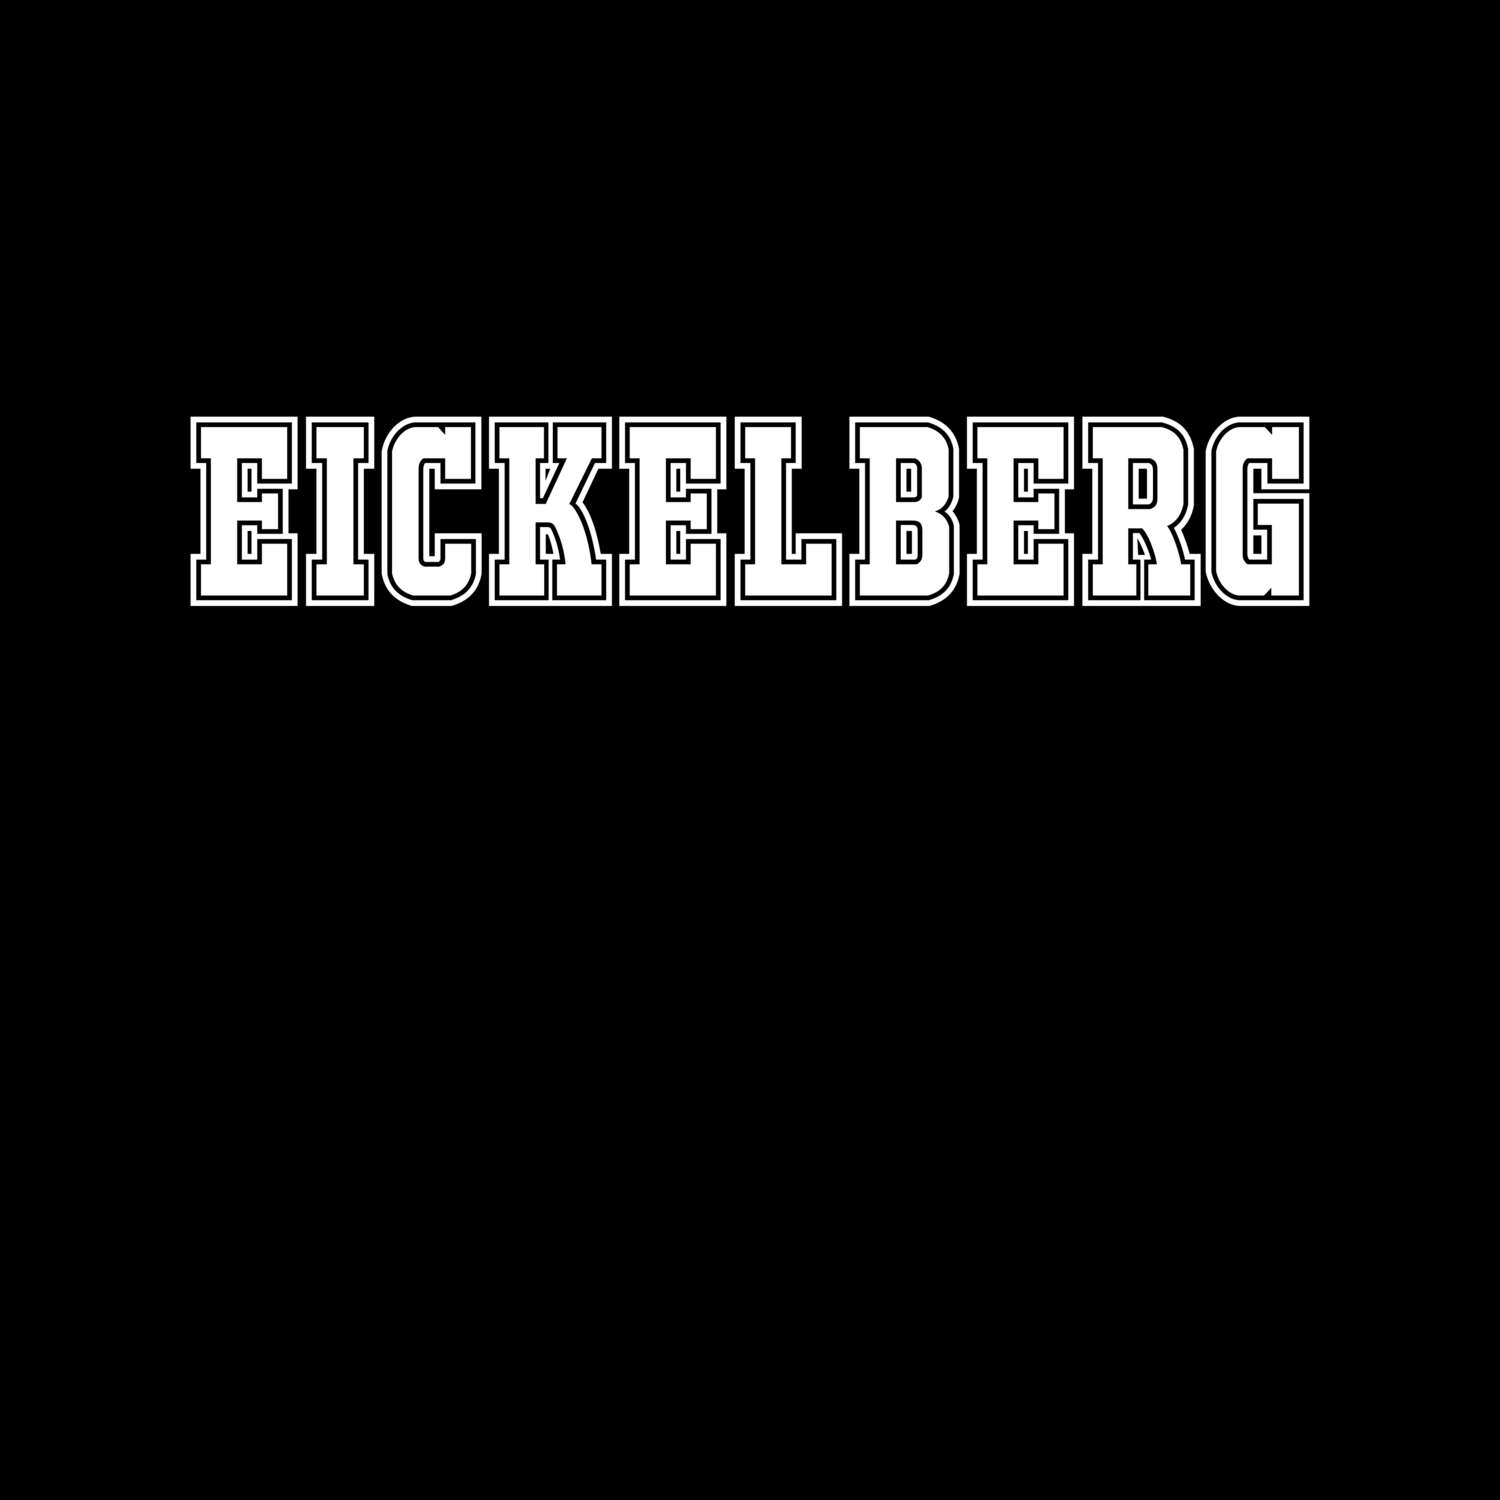 Eickelberg T-Shirt »Classic«